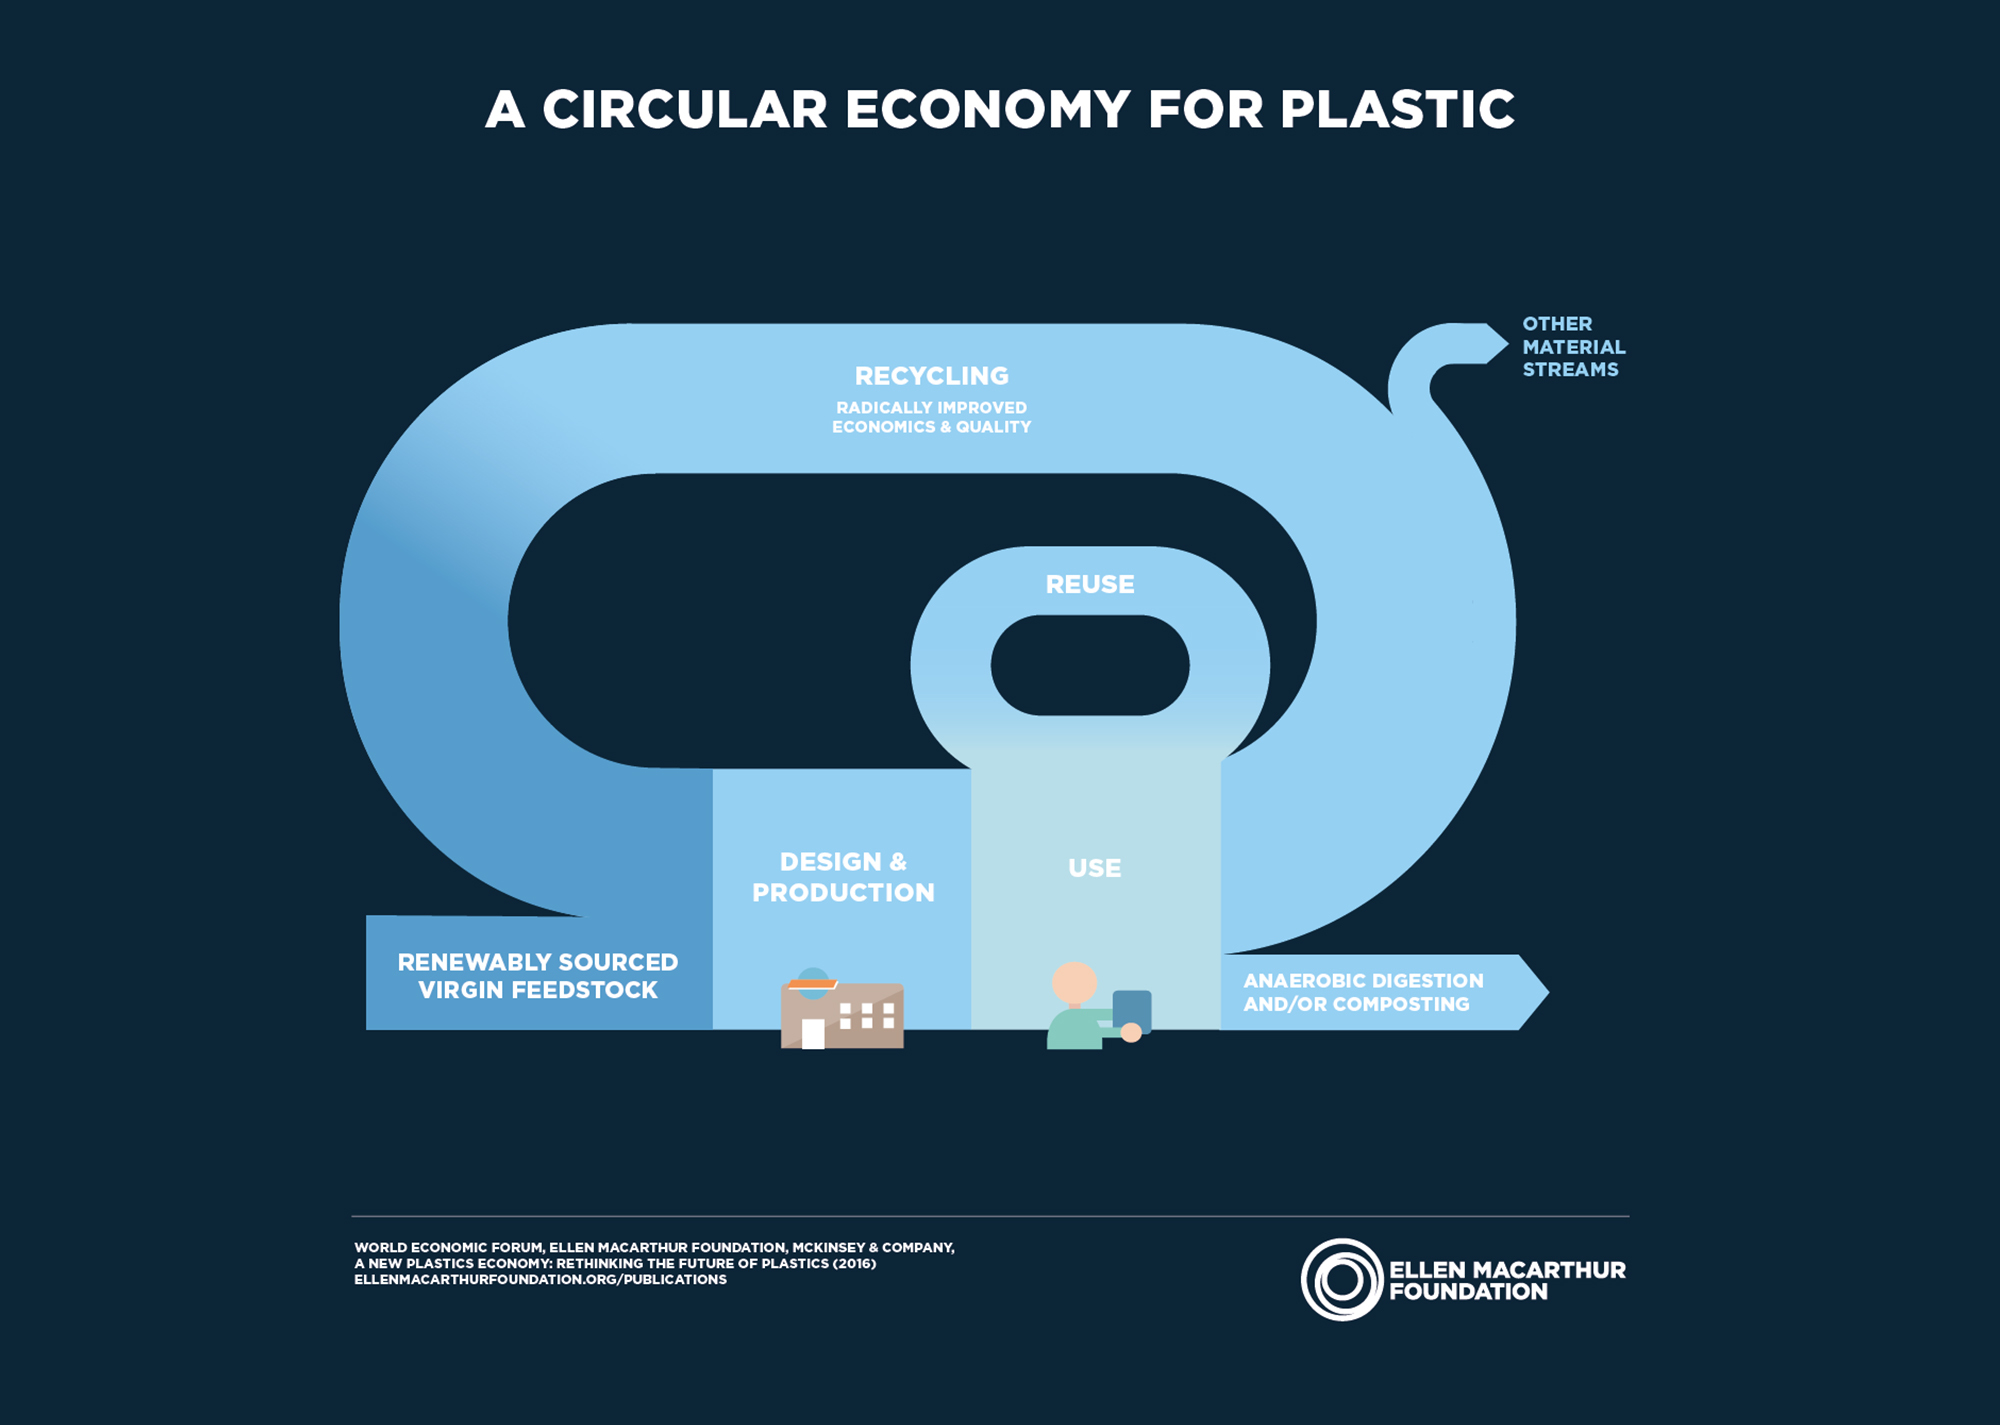 Creative economy. The circular Plastic economy. The New Plastics economy Rethinking the Future of Plastic. Ellen MACARTHUR Foundation циклическая экономика. Rethinking the Future.